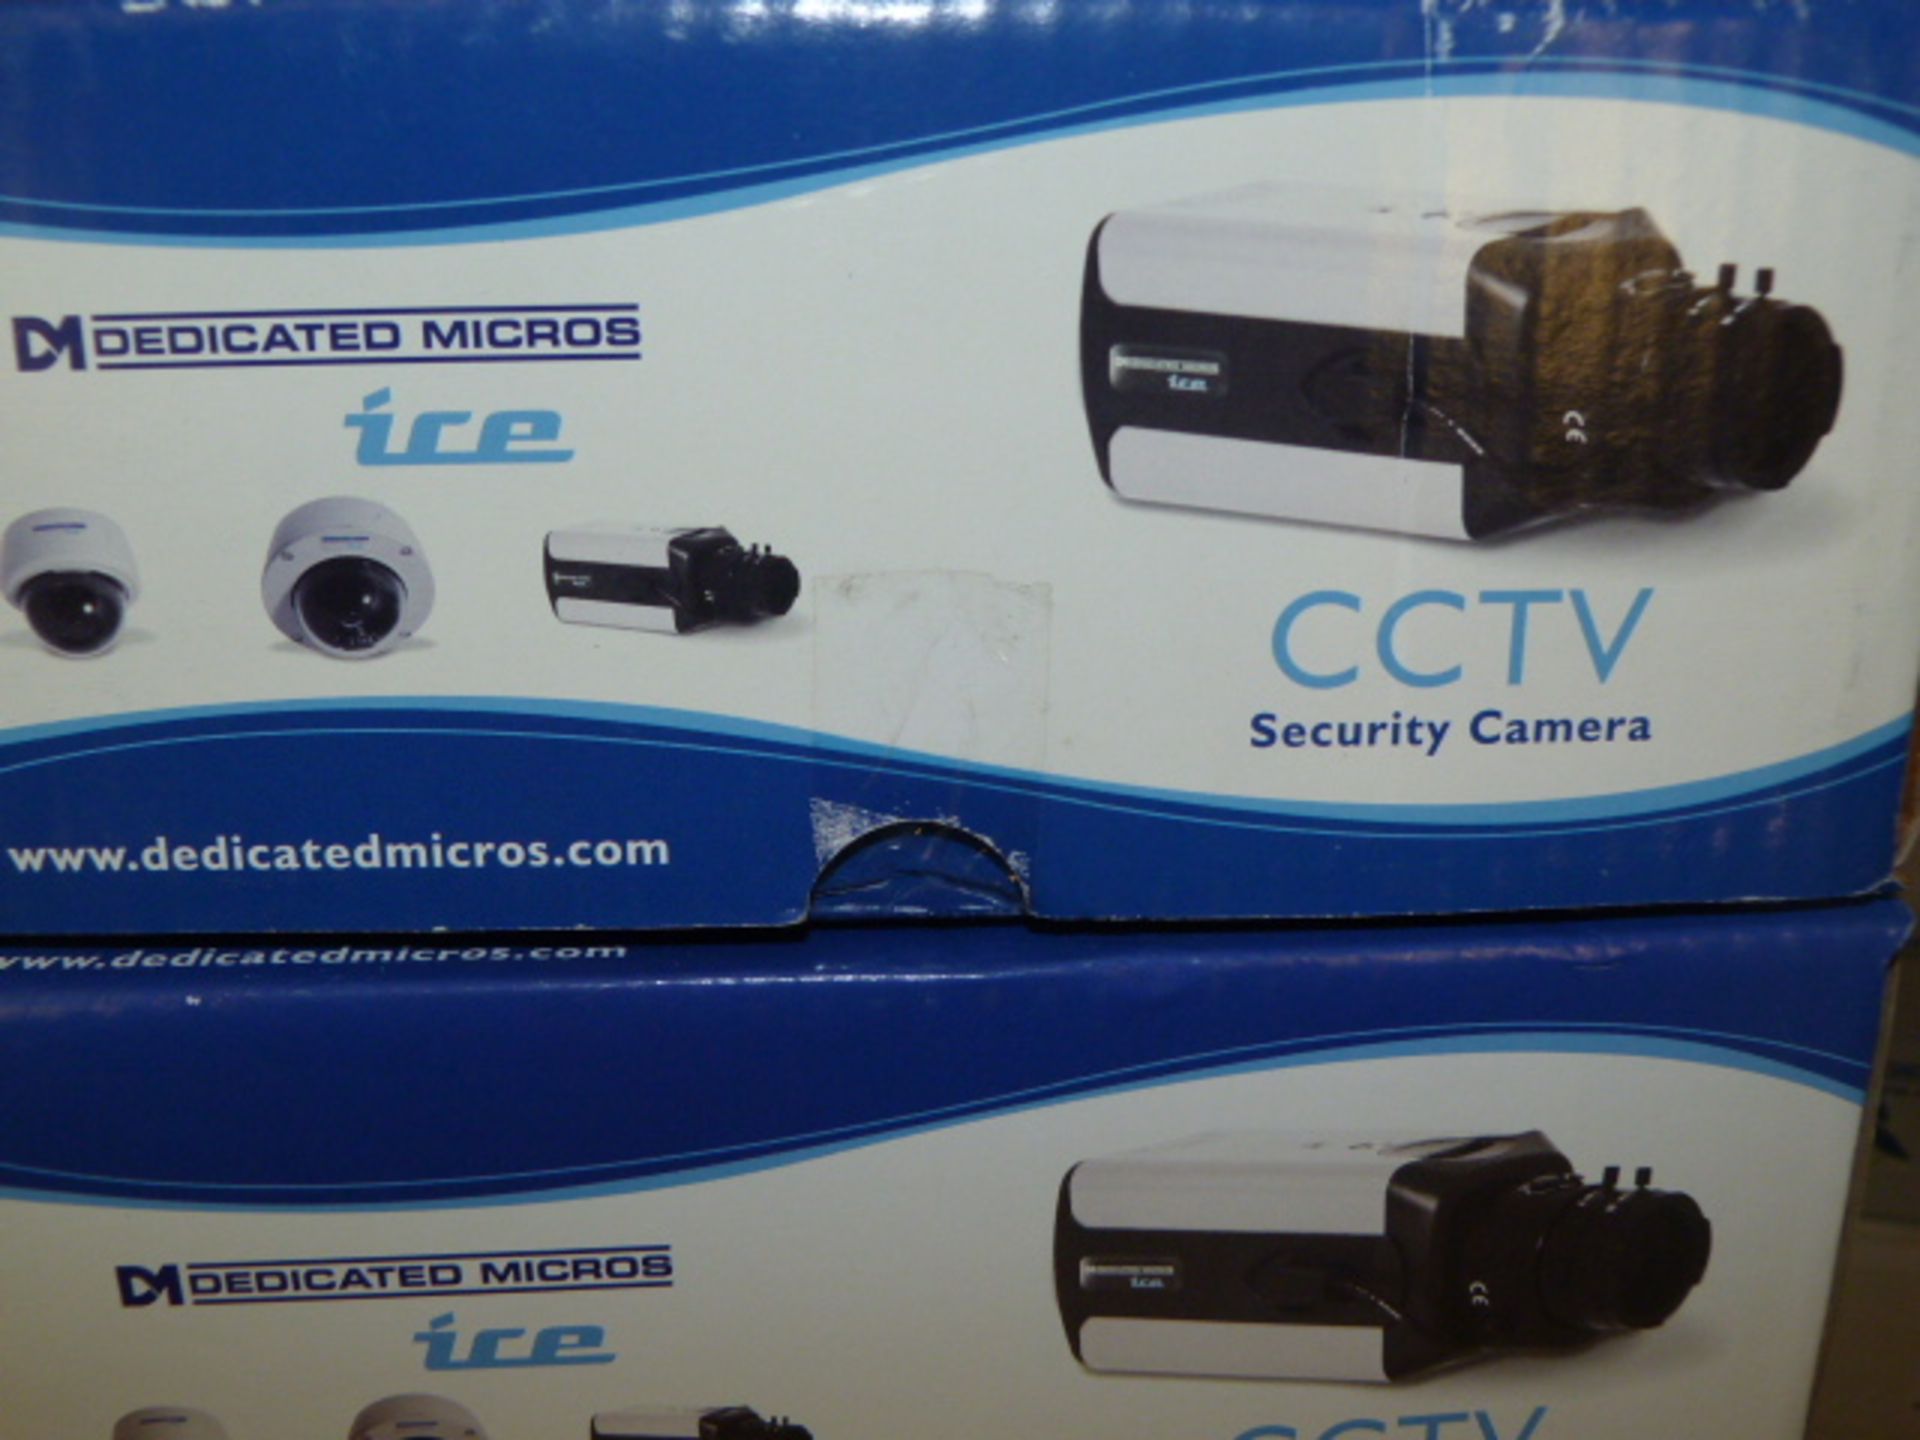 *Two Dedicated Micros CCTV Cameras DM/ICE+B2XHT/L